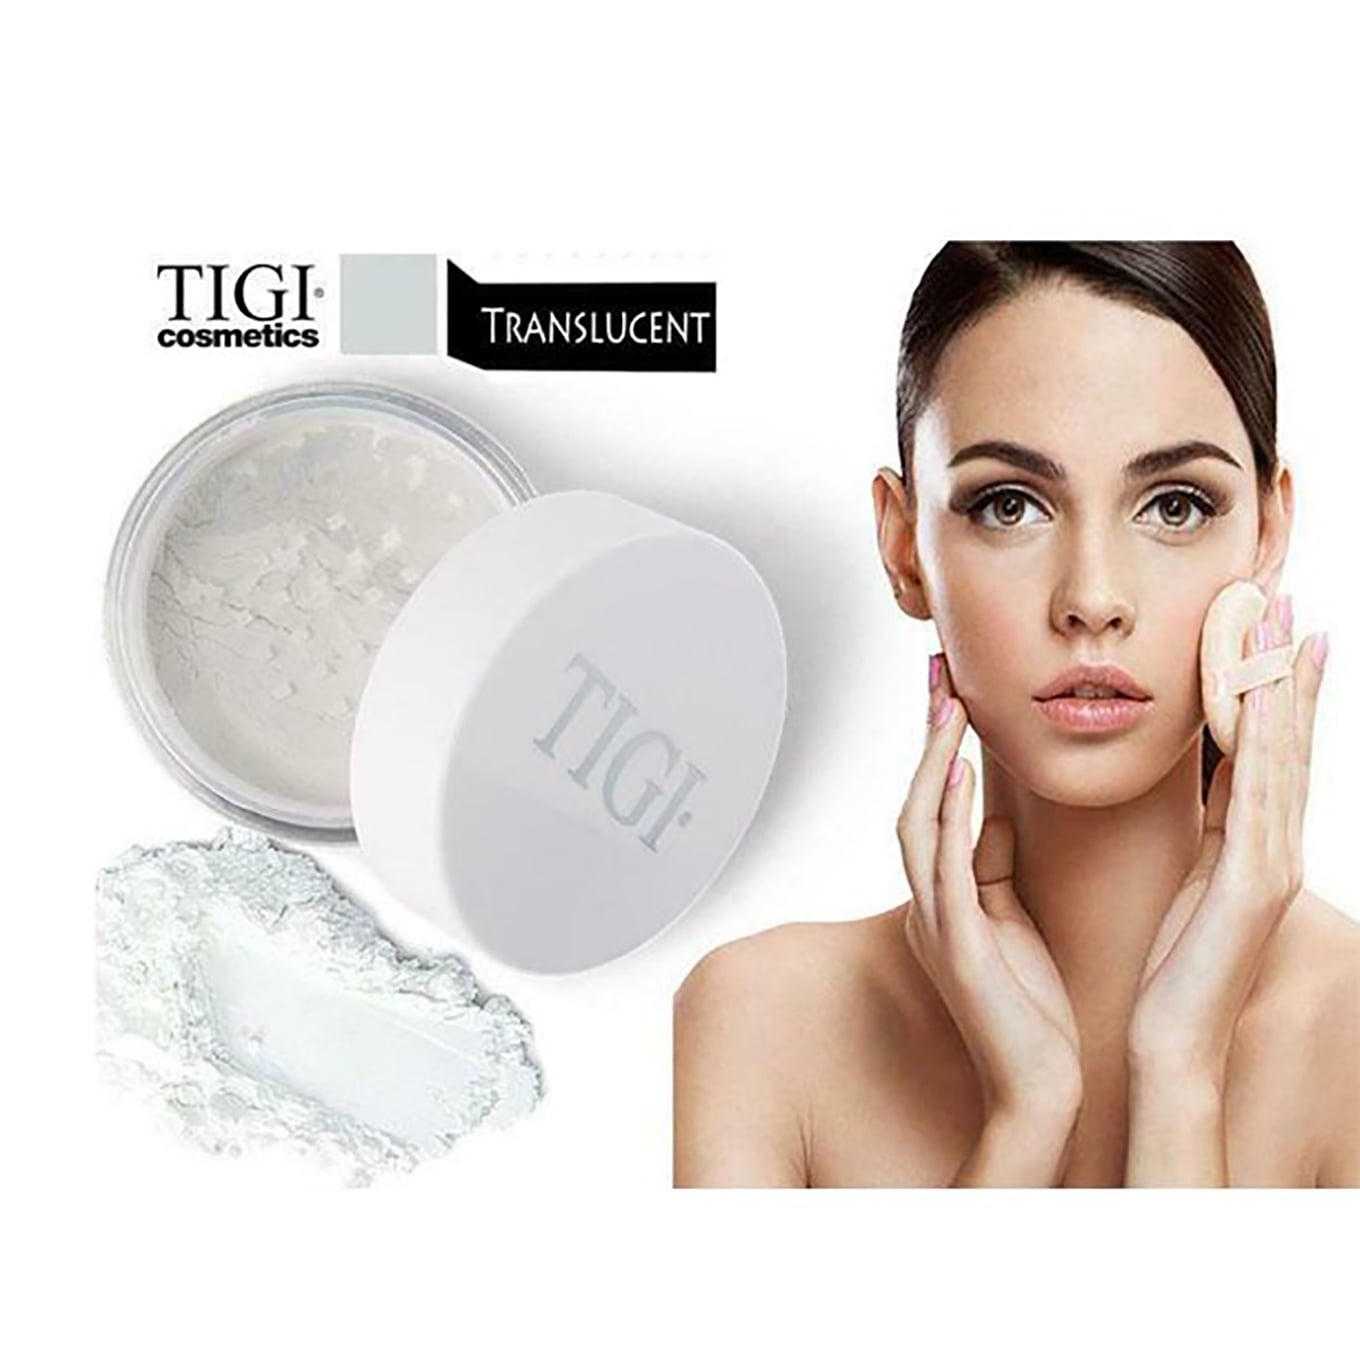 TIGI High Definition Setting Powder Makeup Shade 0.58 Oz Walmart.com